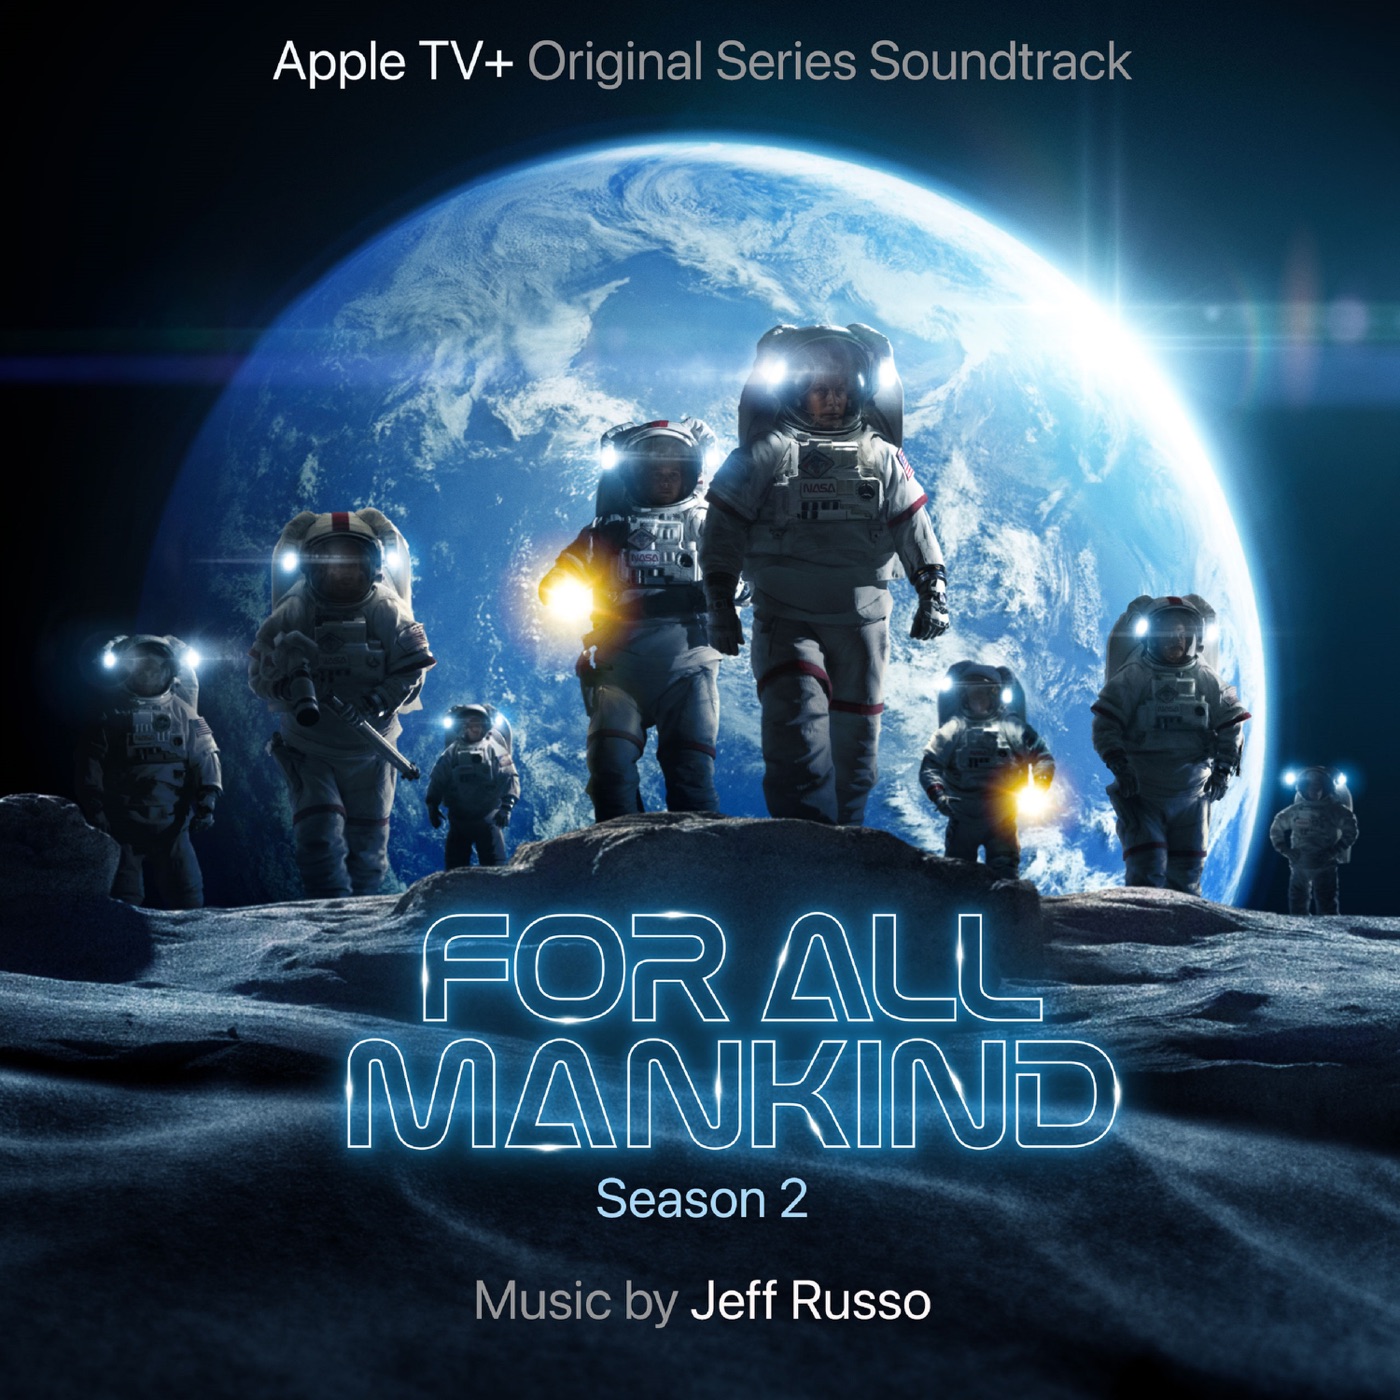 For All Mankind: Season 2 (Apple TV+ Original Series Soundtrack) by Jeff Russo, For All Mankind: Season 2 (Apple TV+ Original Series Soundtrack)